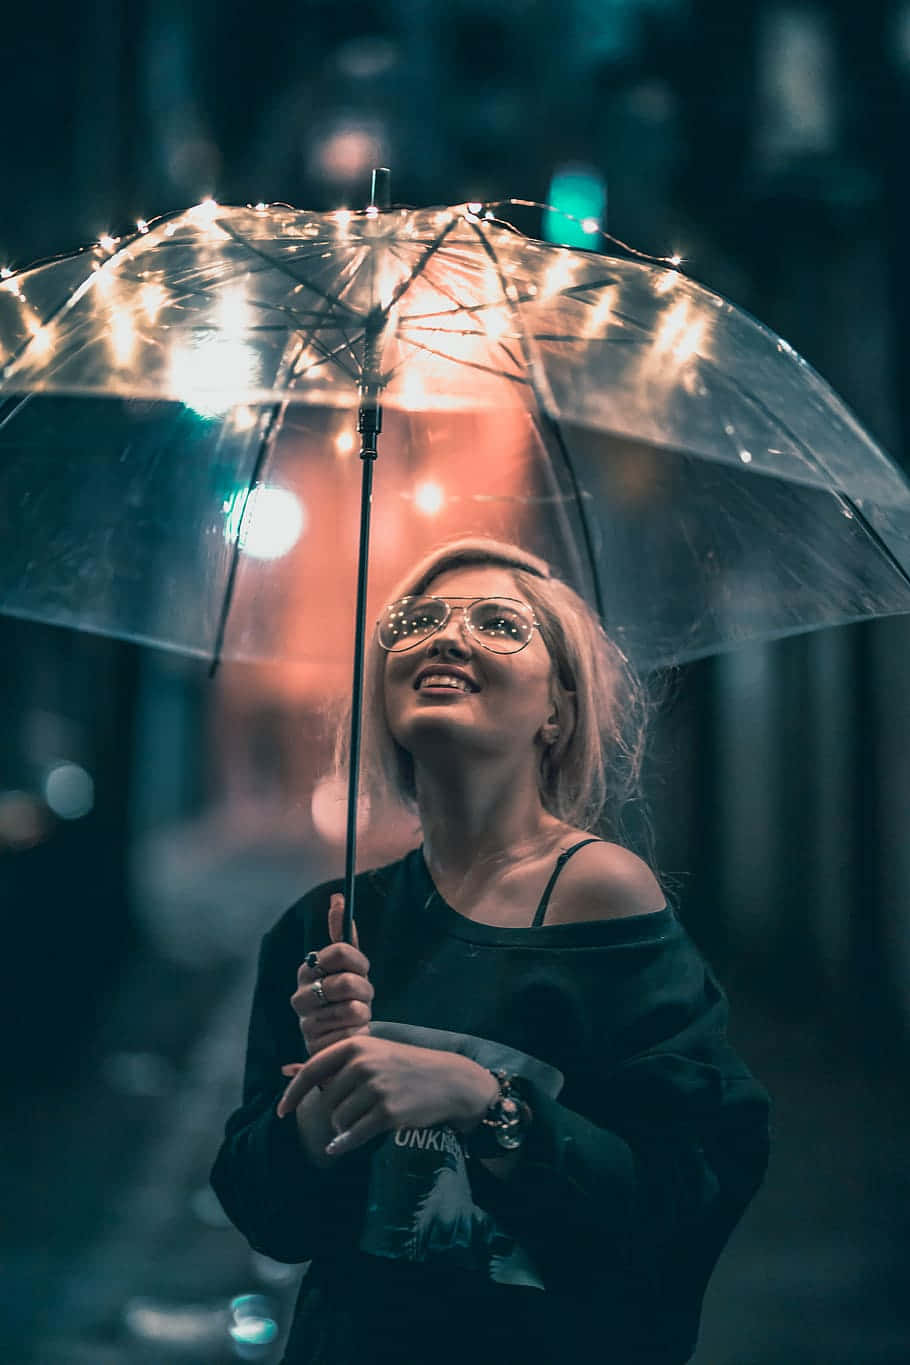 Illuminated Umbrella Nighttime Portrait